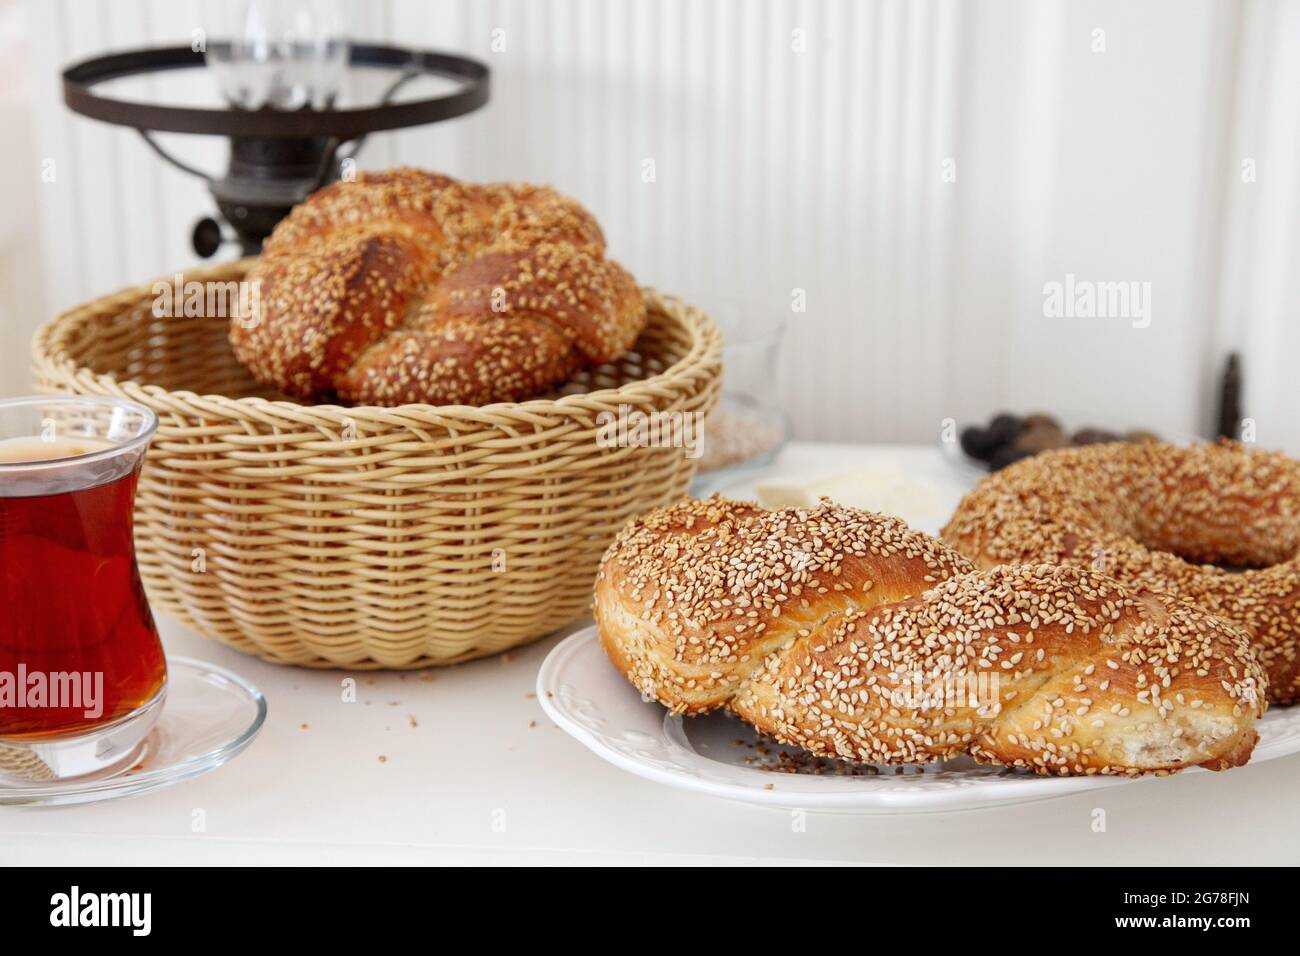 Sesame cookies, black tea, baked goods, bread basket, Ramadan, Turkish, culture, fasting month Stock Photo